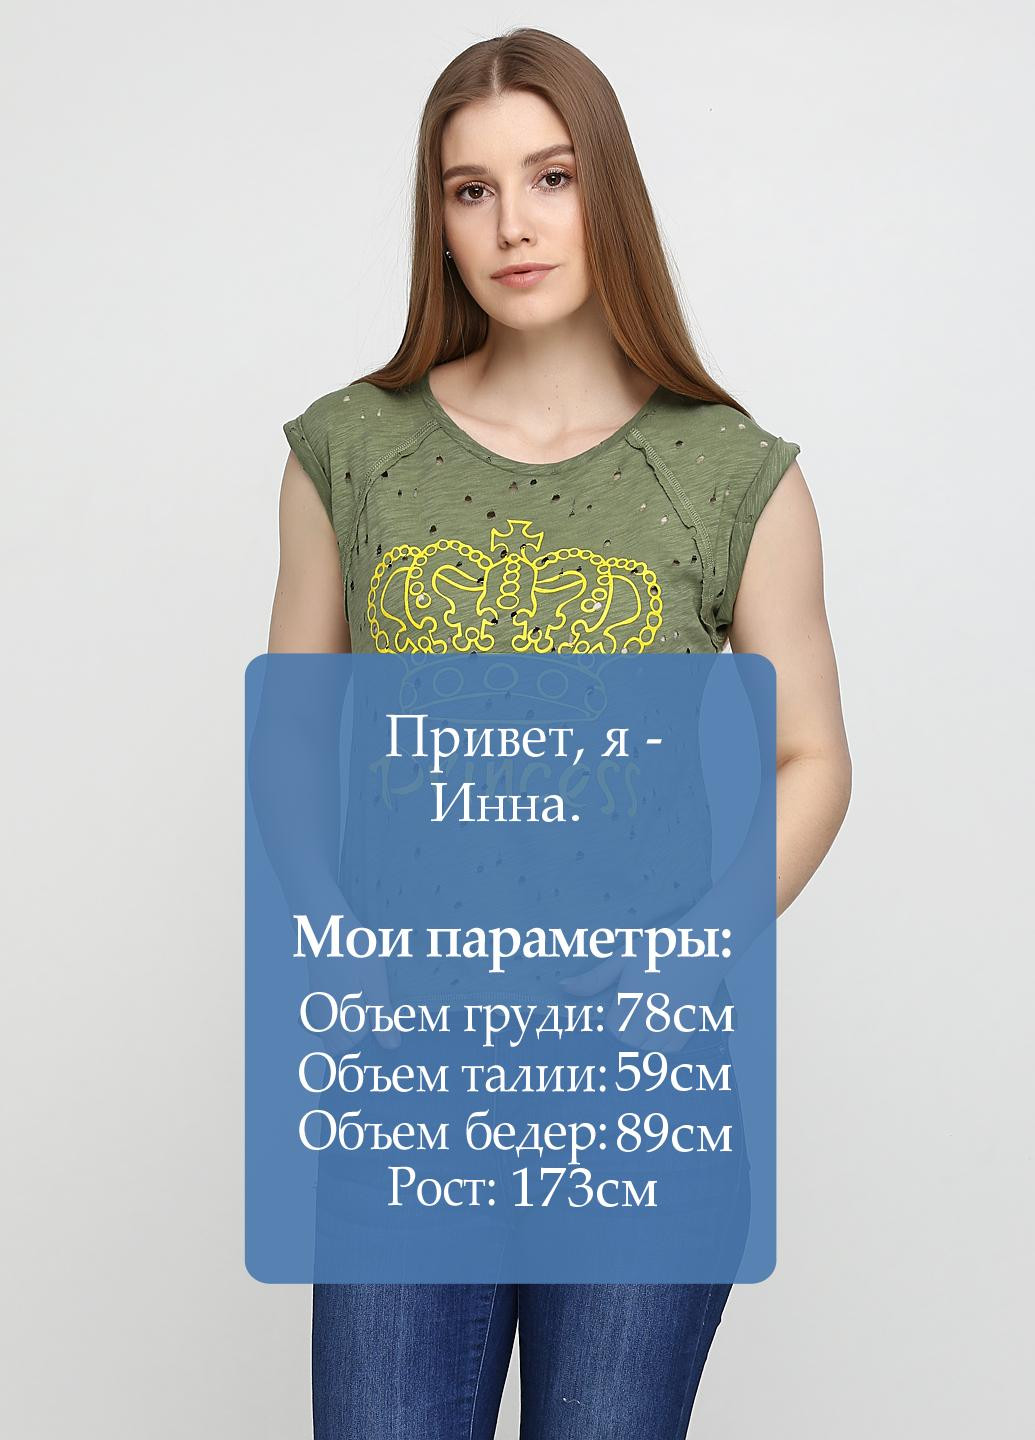 Хаки (оливковая) летняя футболка Power